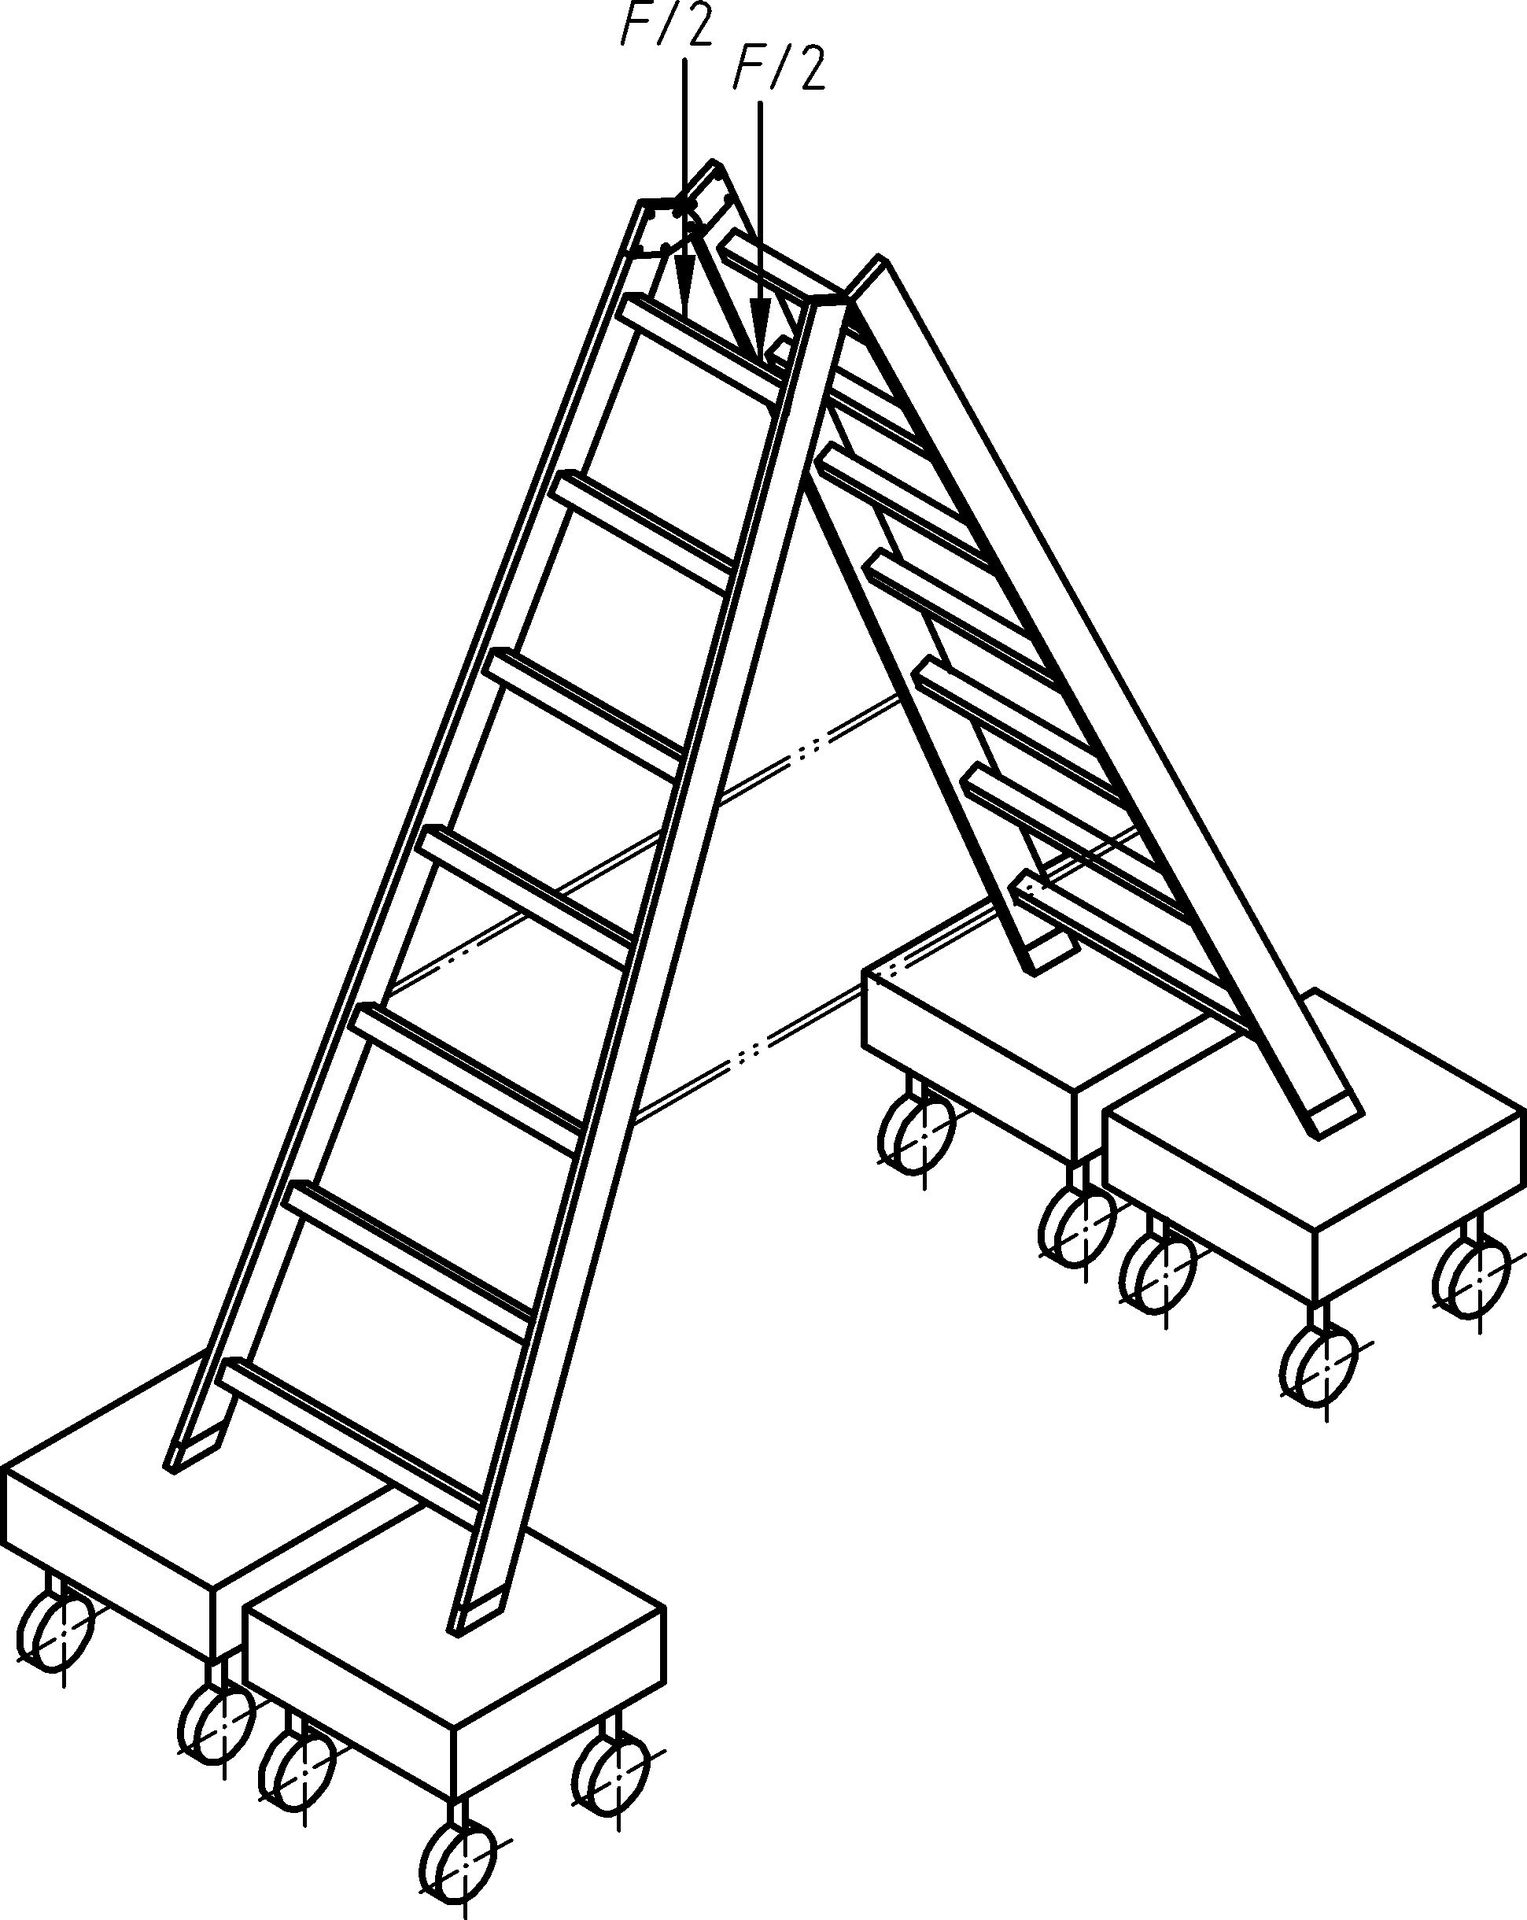 Ladder Opening Restraints and Hinge Test